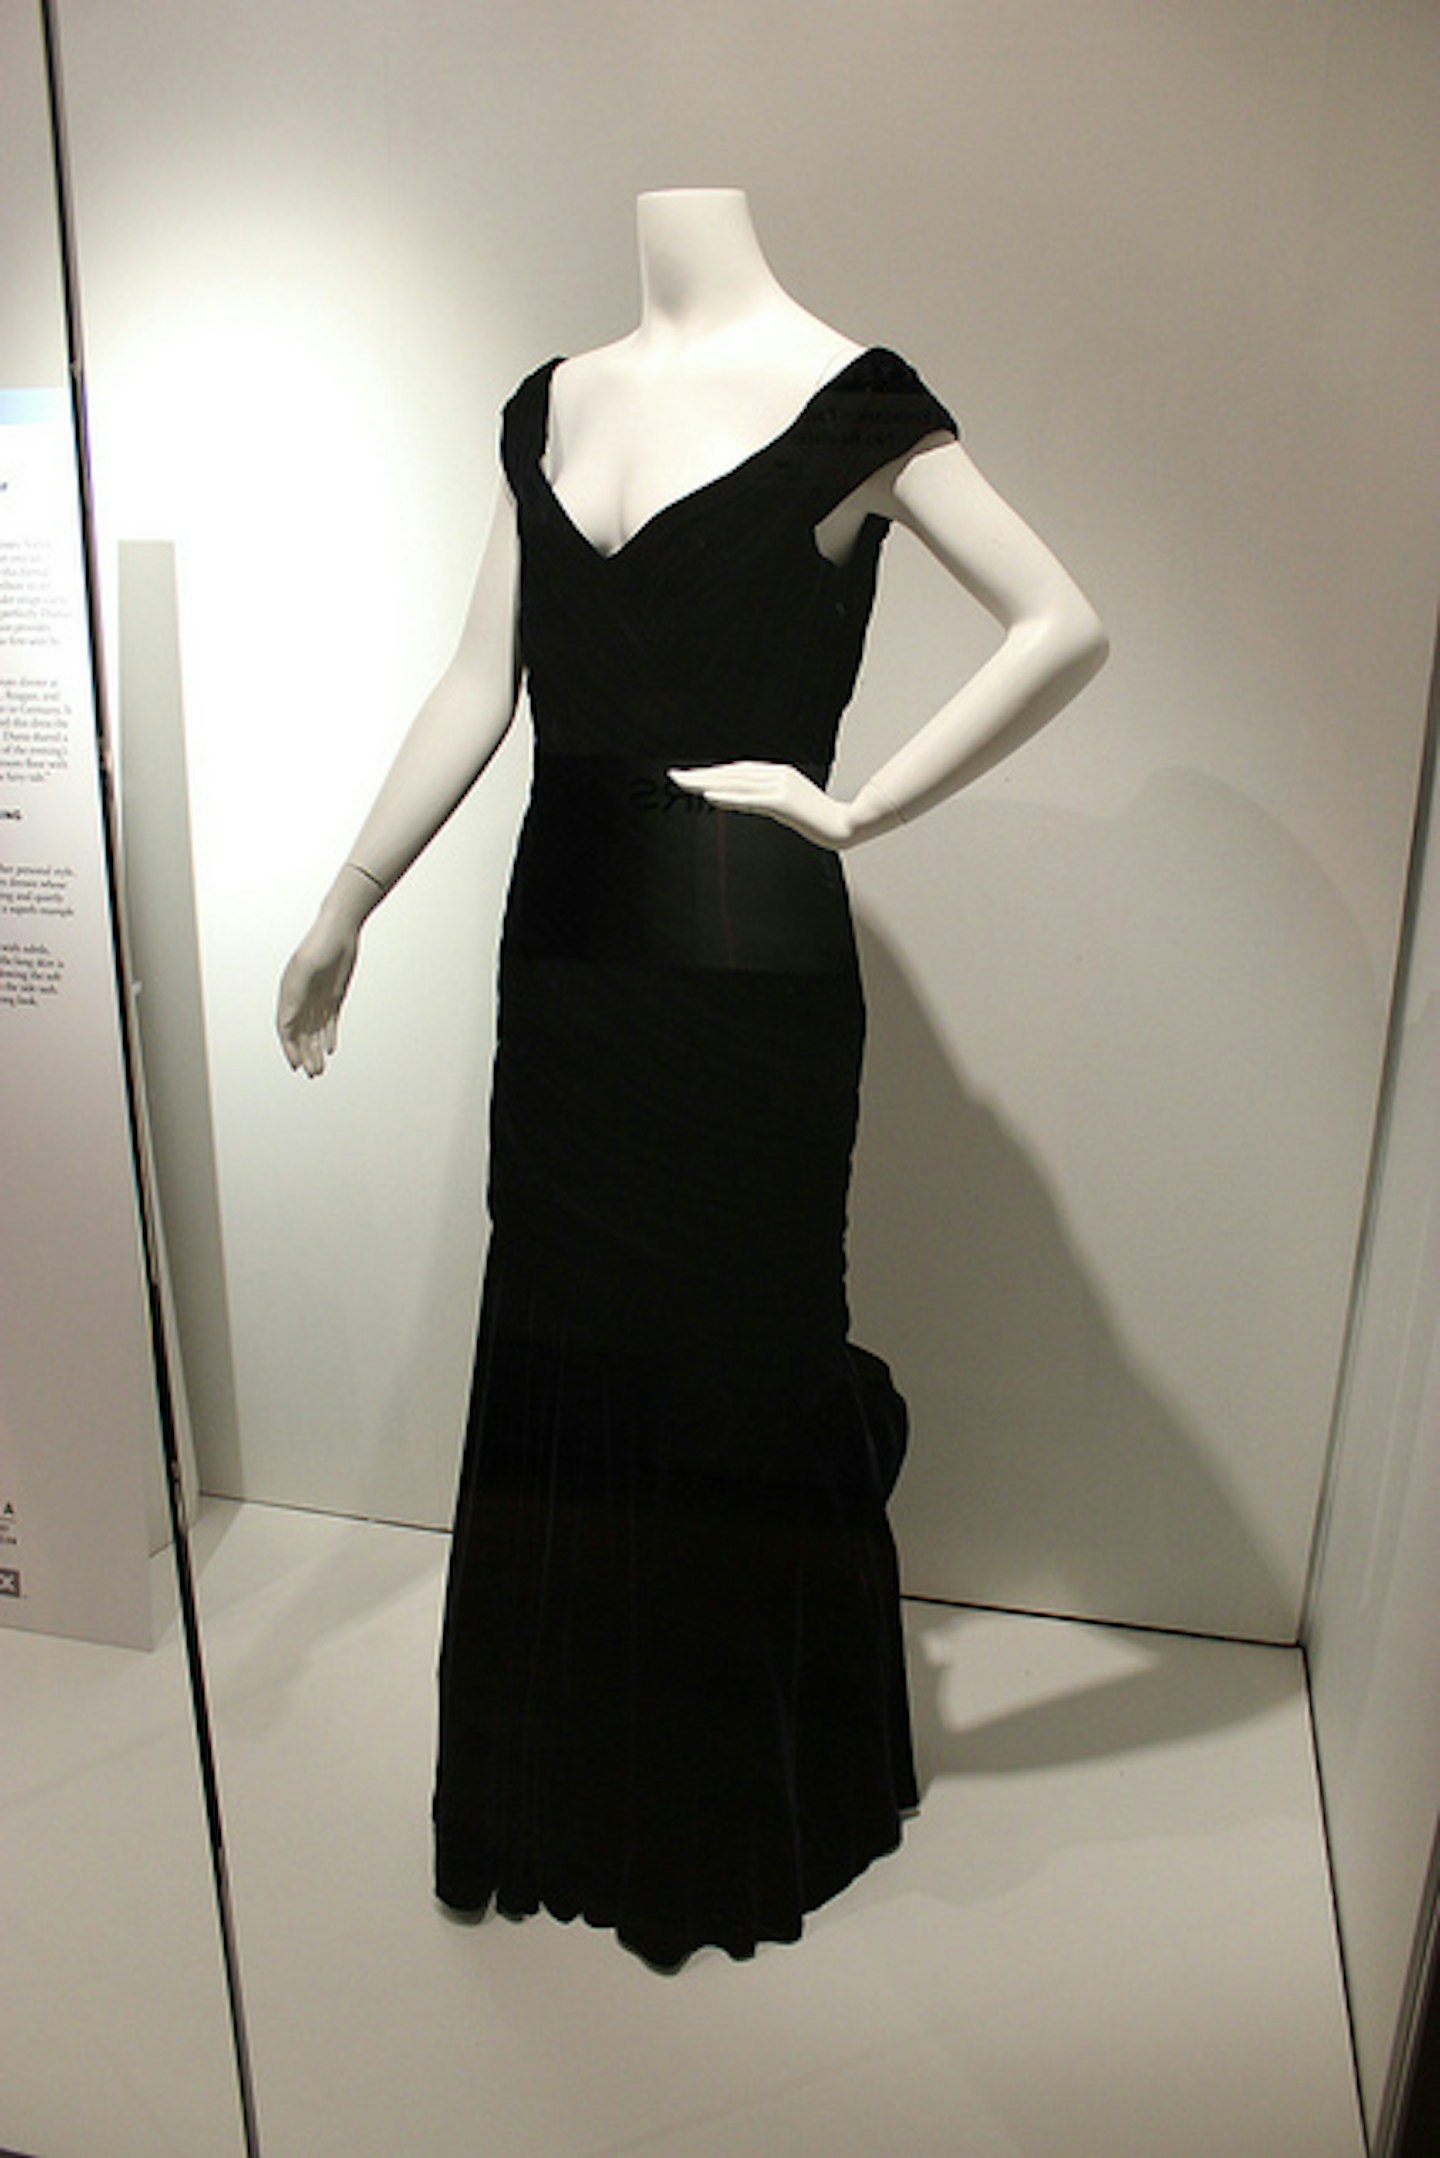 Princess Diana’s Dresses up for Auction